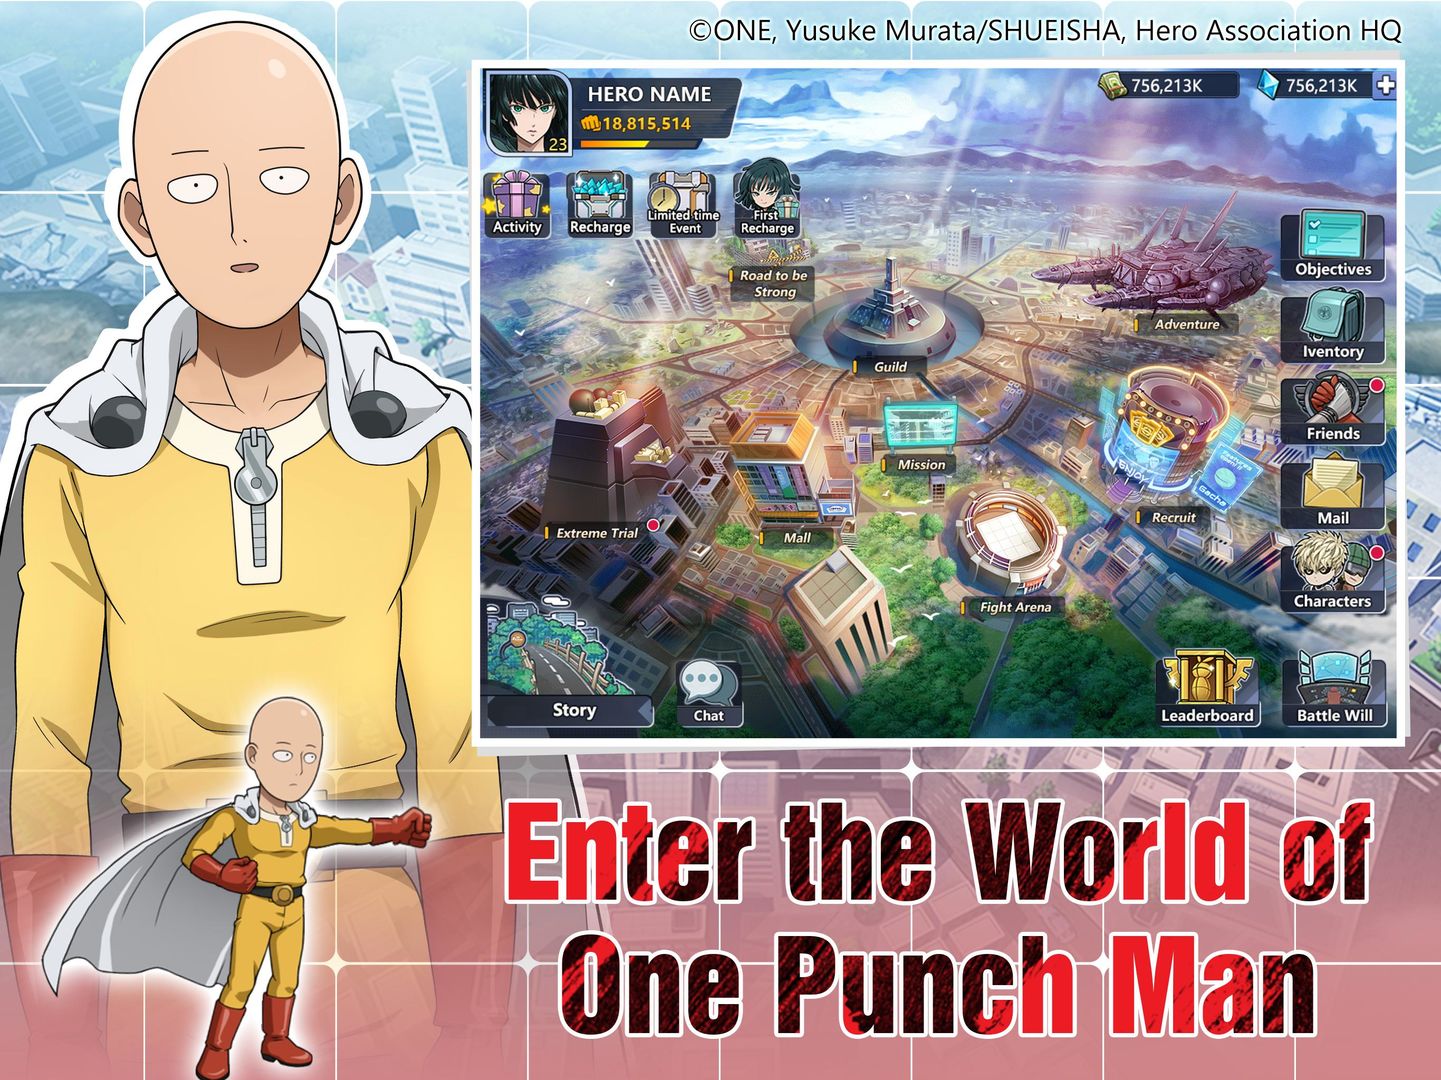 Screenshot of One-Punch Man: Road to Hero 2.0